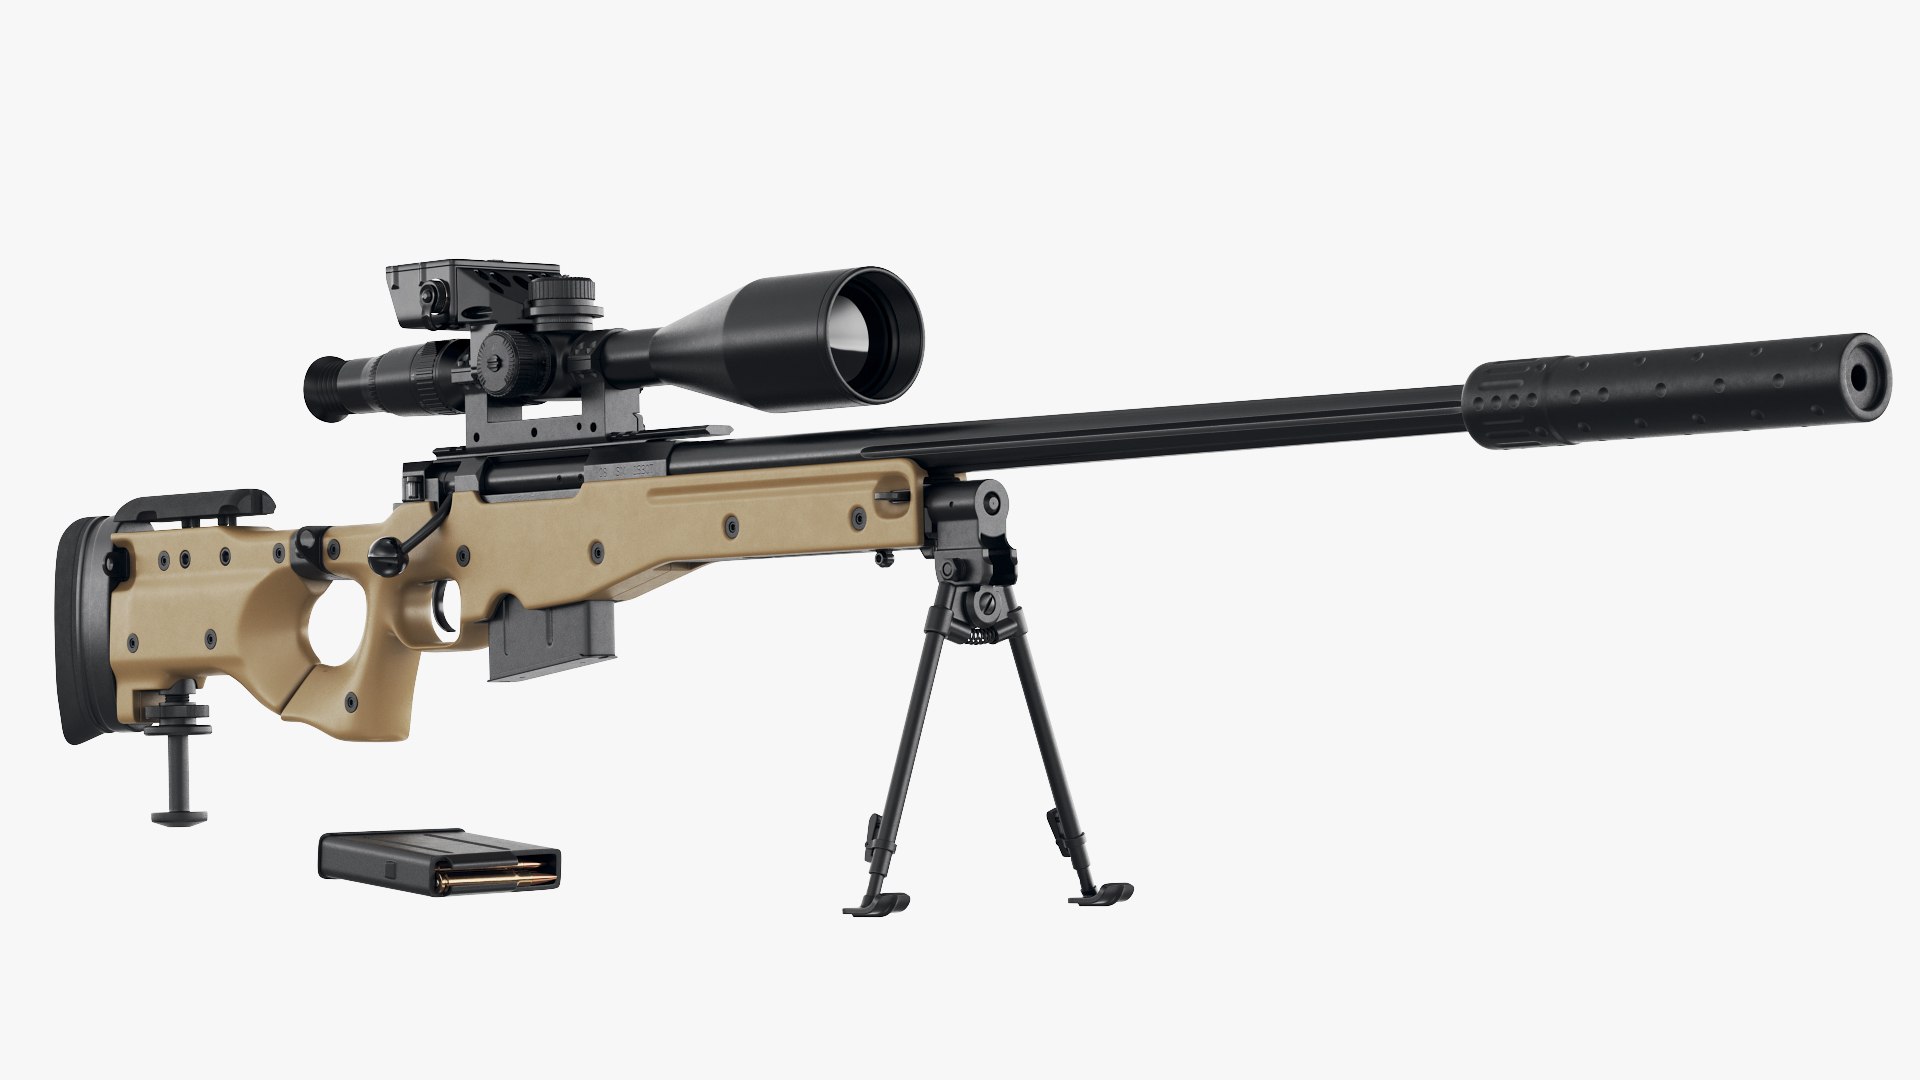 AWM/AWP Sniper Rifle — polycount